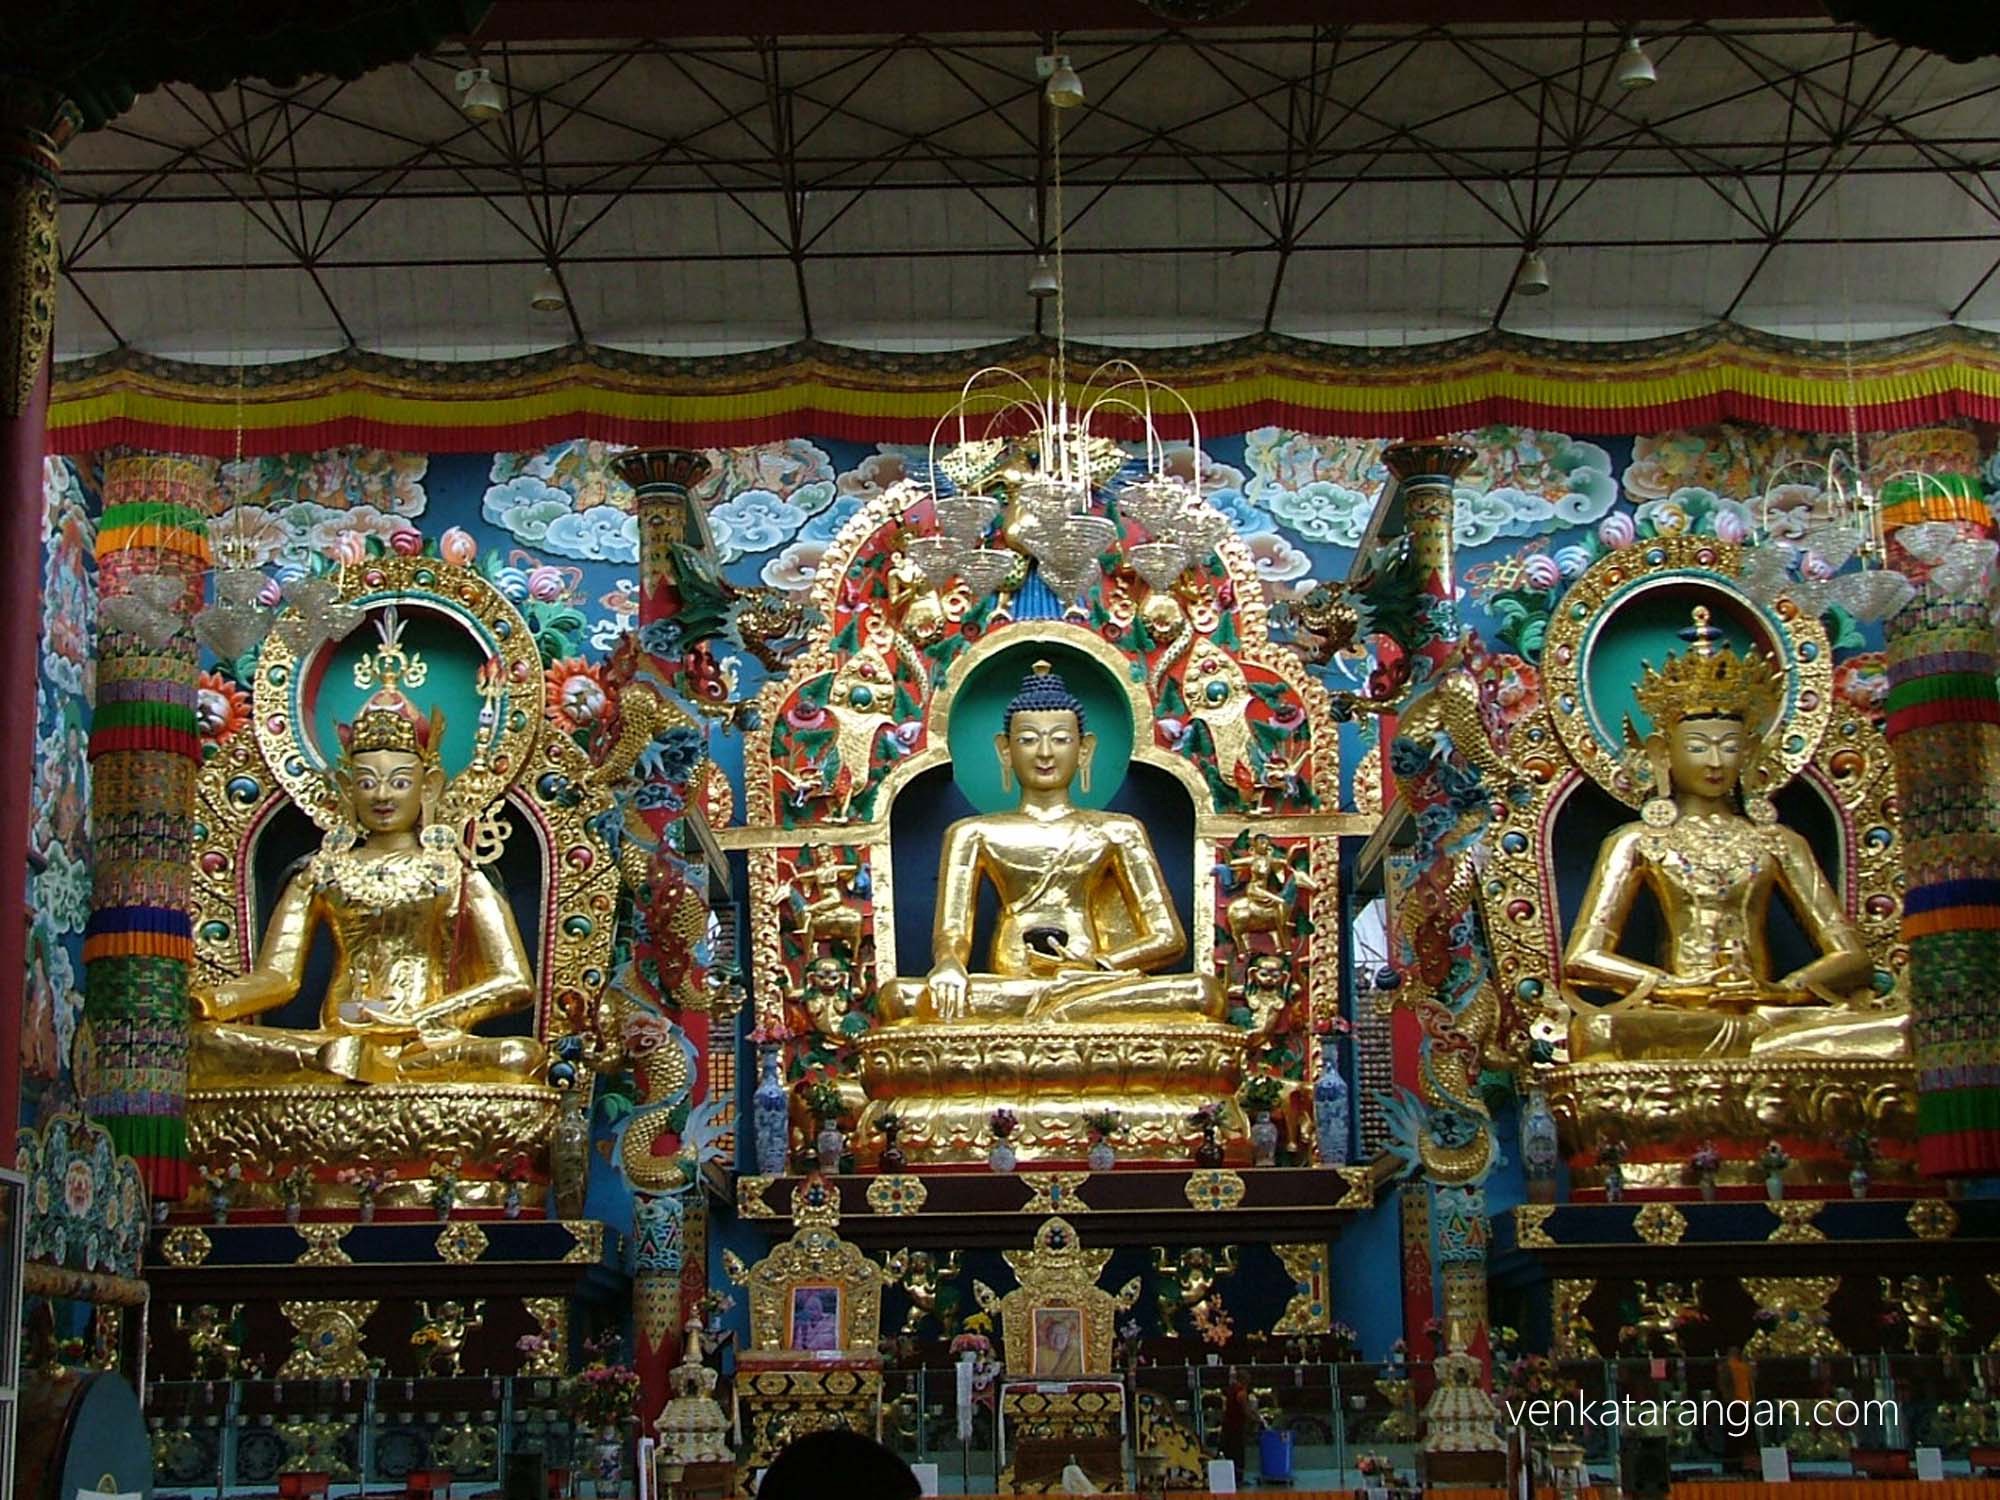 (in centre) Buddha Statue in Namdroling Monastery